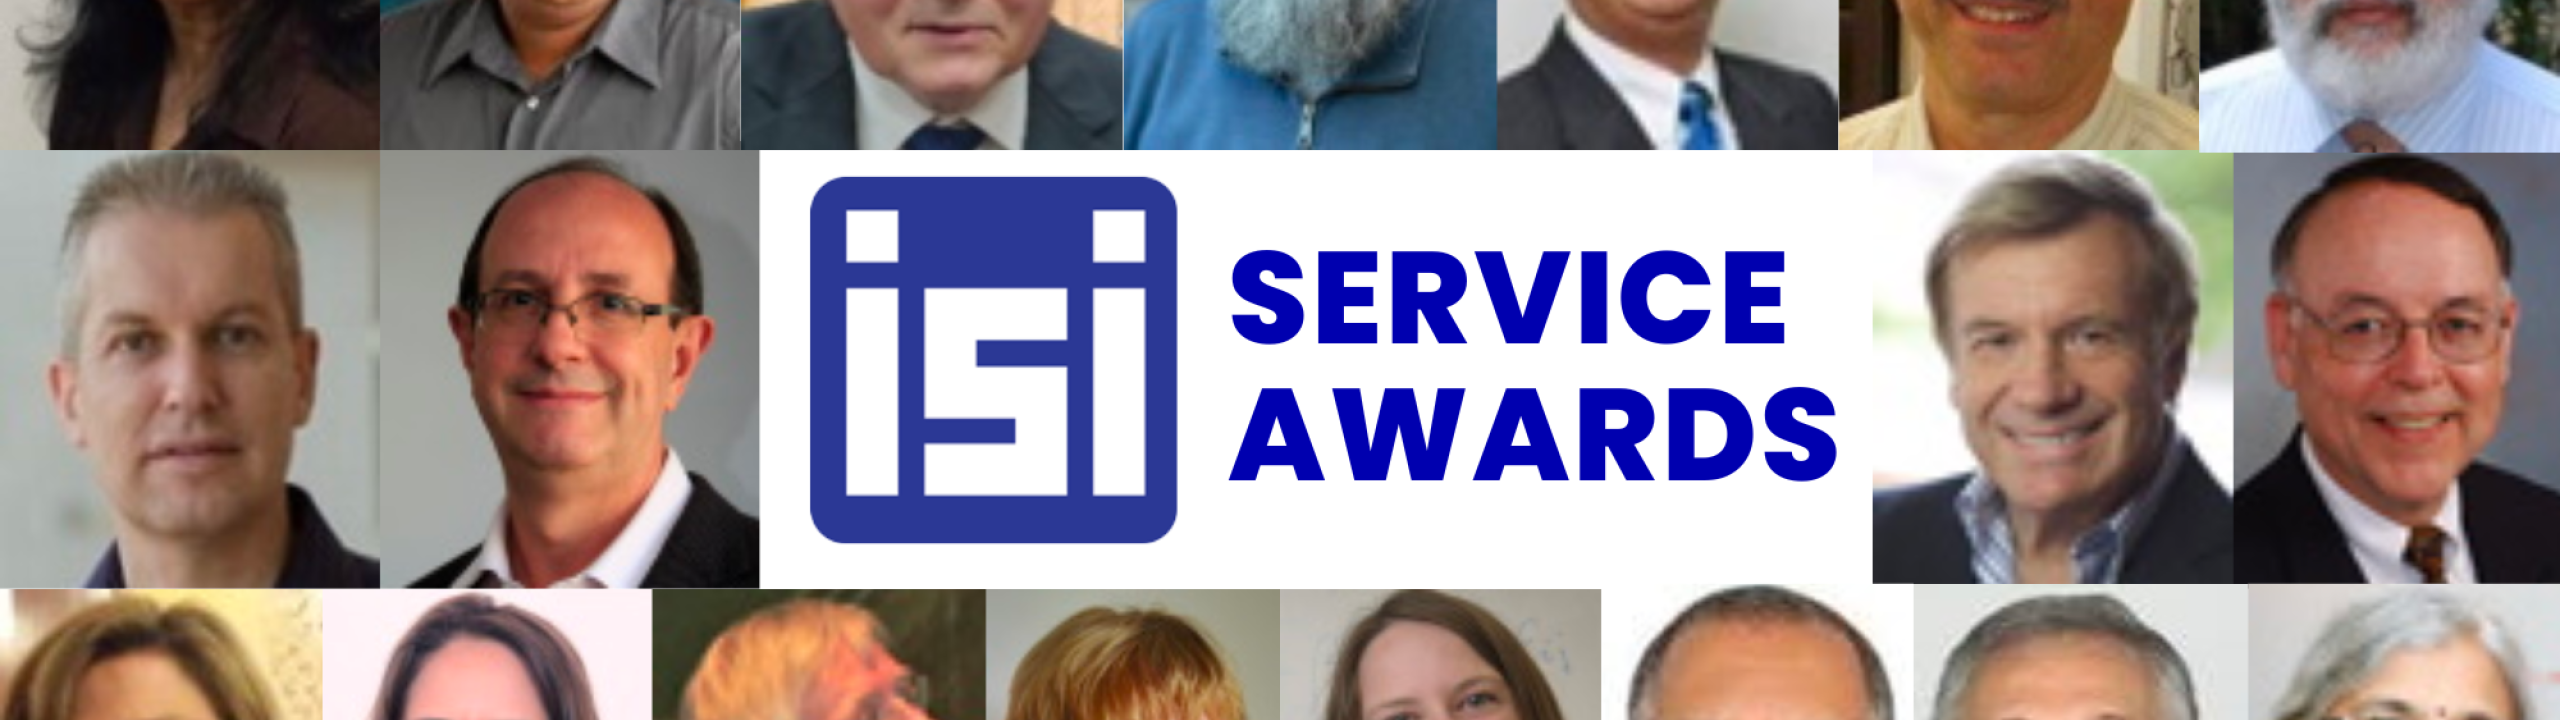 isi-service-awards